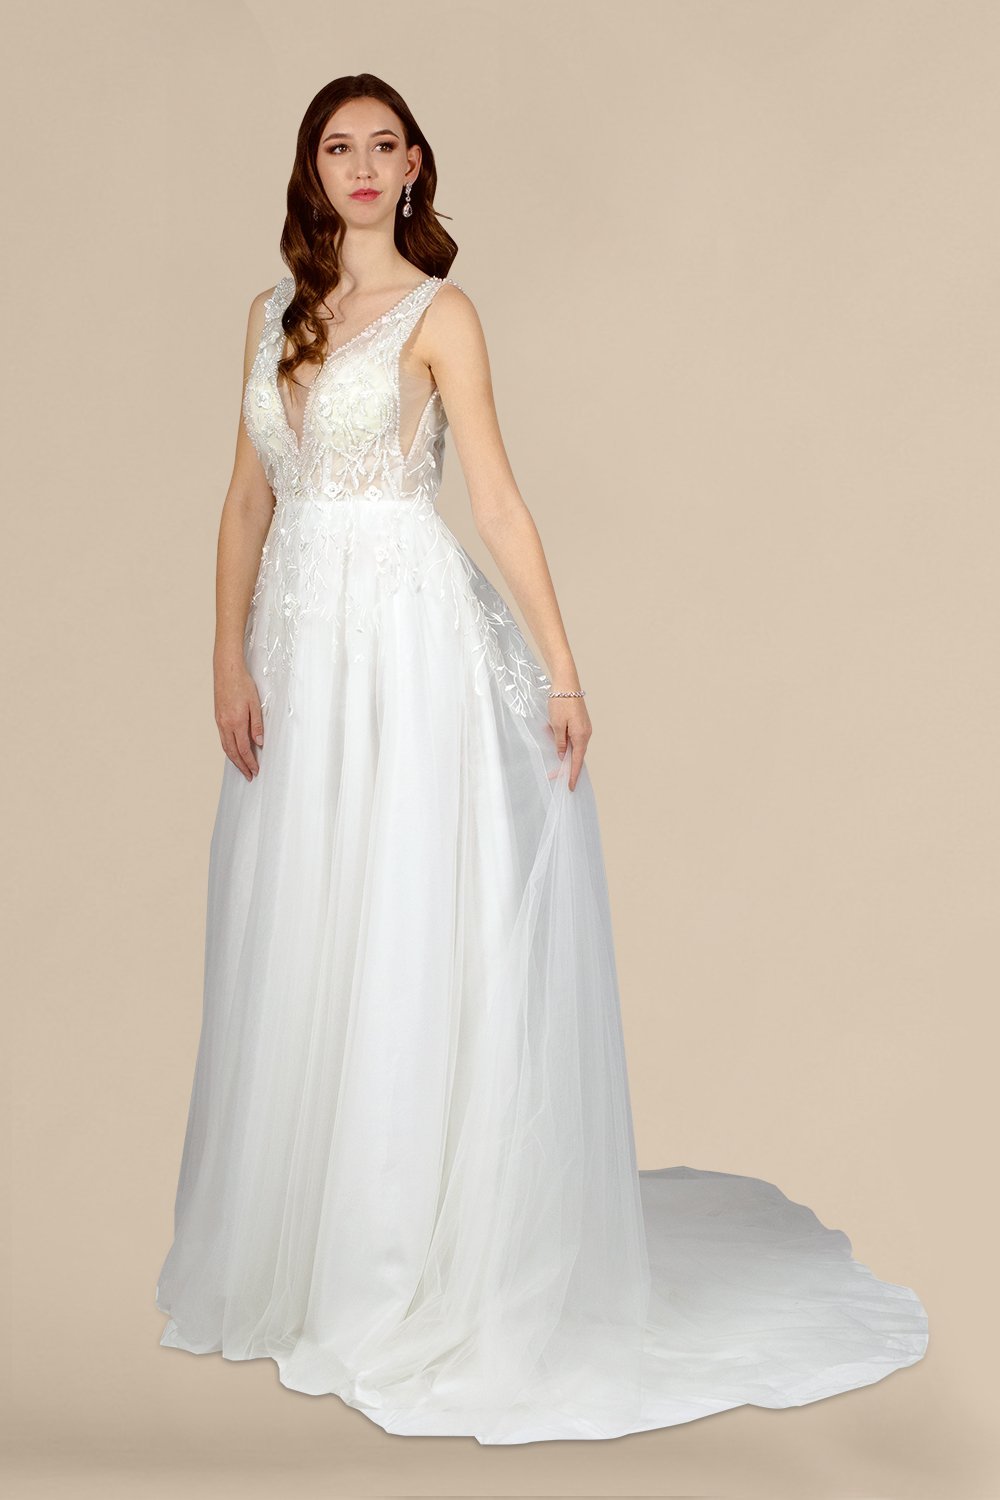 custom wedding dress designer & dressmaker perth australia envious bridal & formal